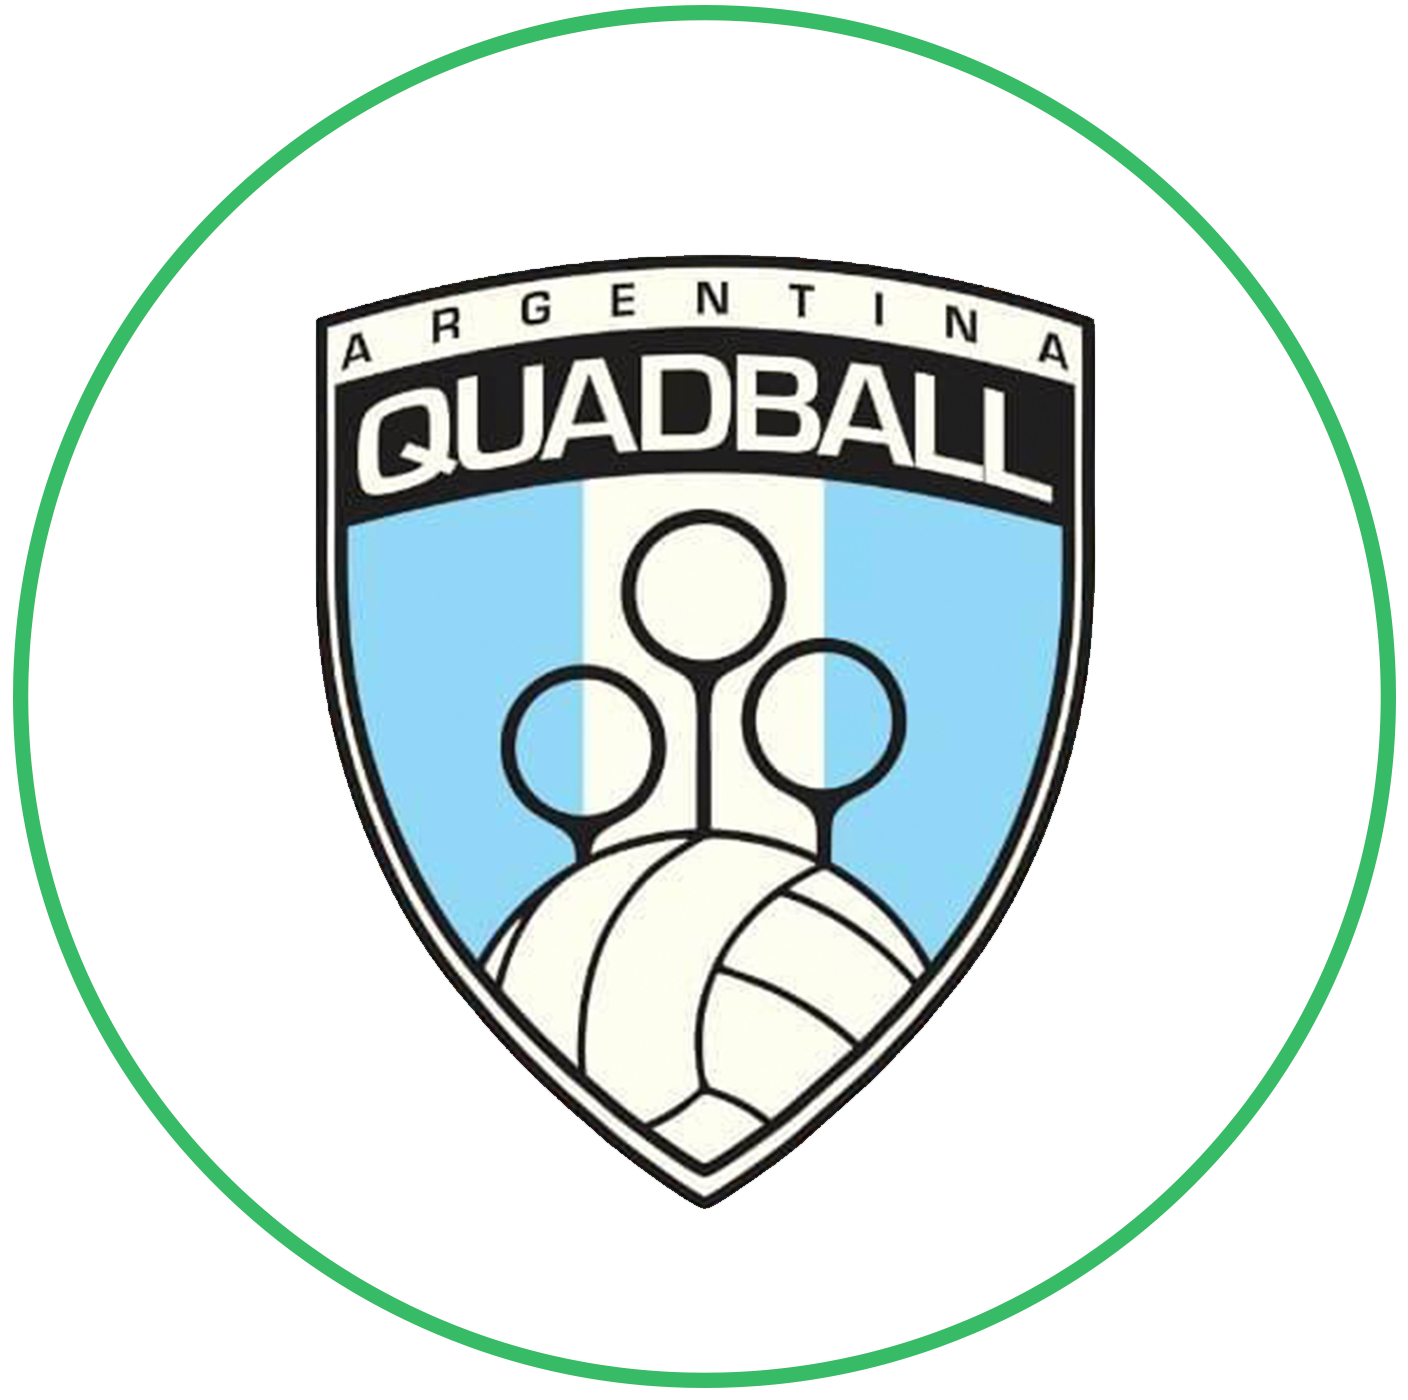 Quadball Argentina logo